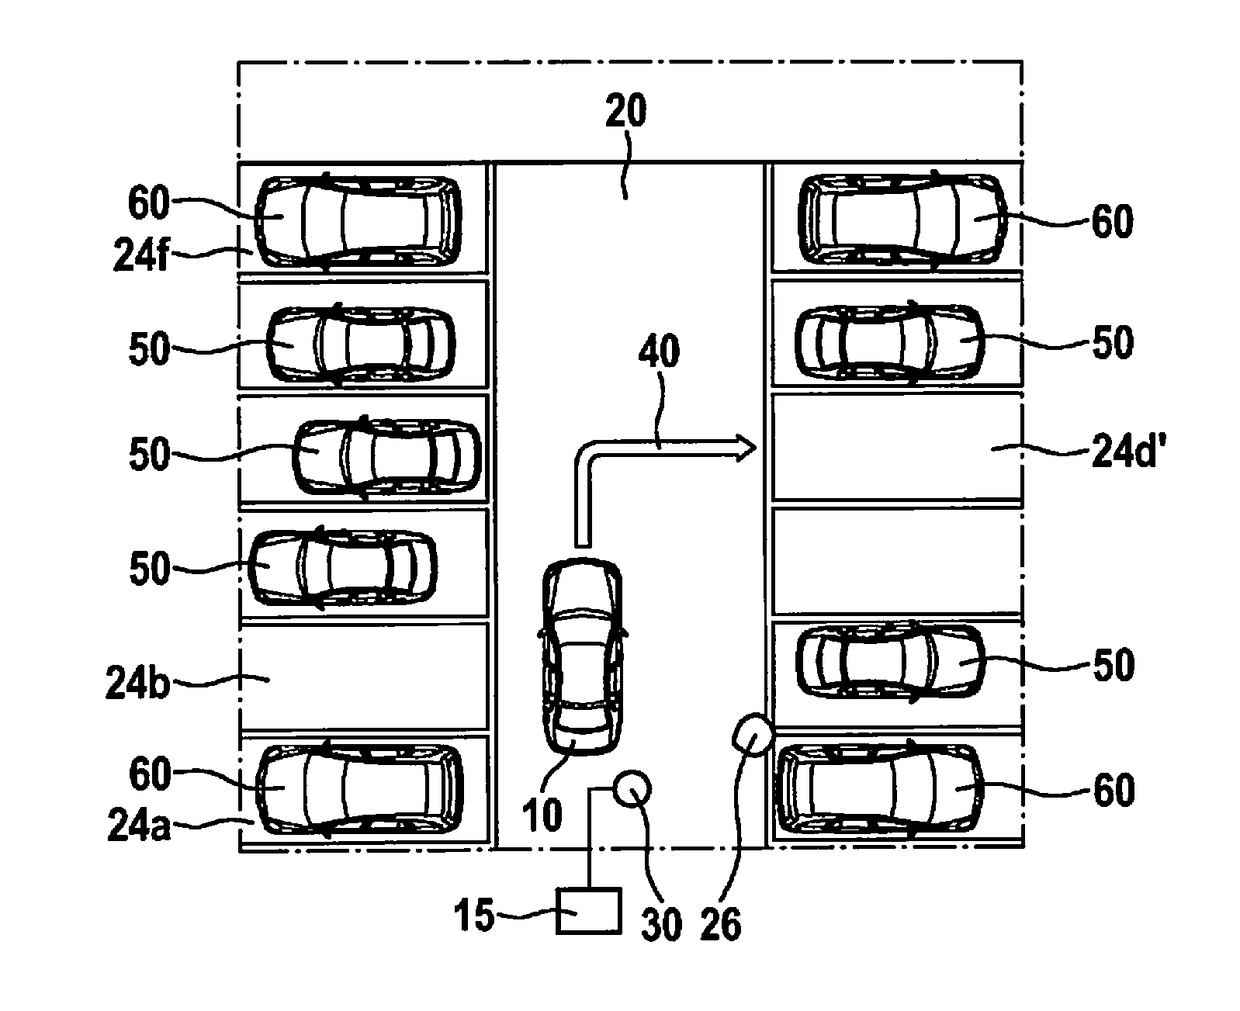 Valet parking method and system